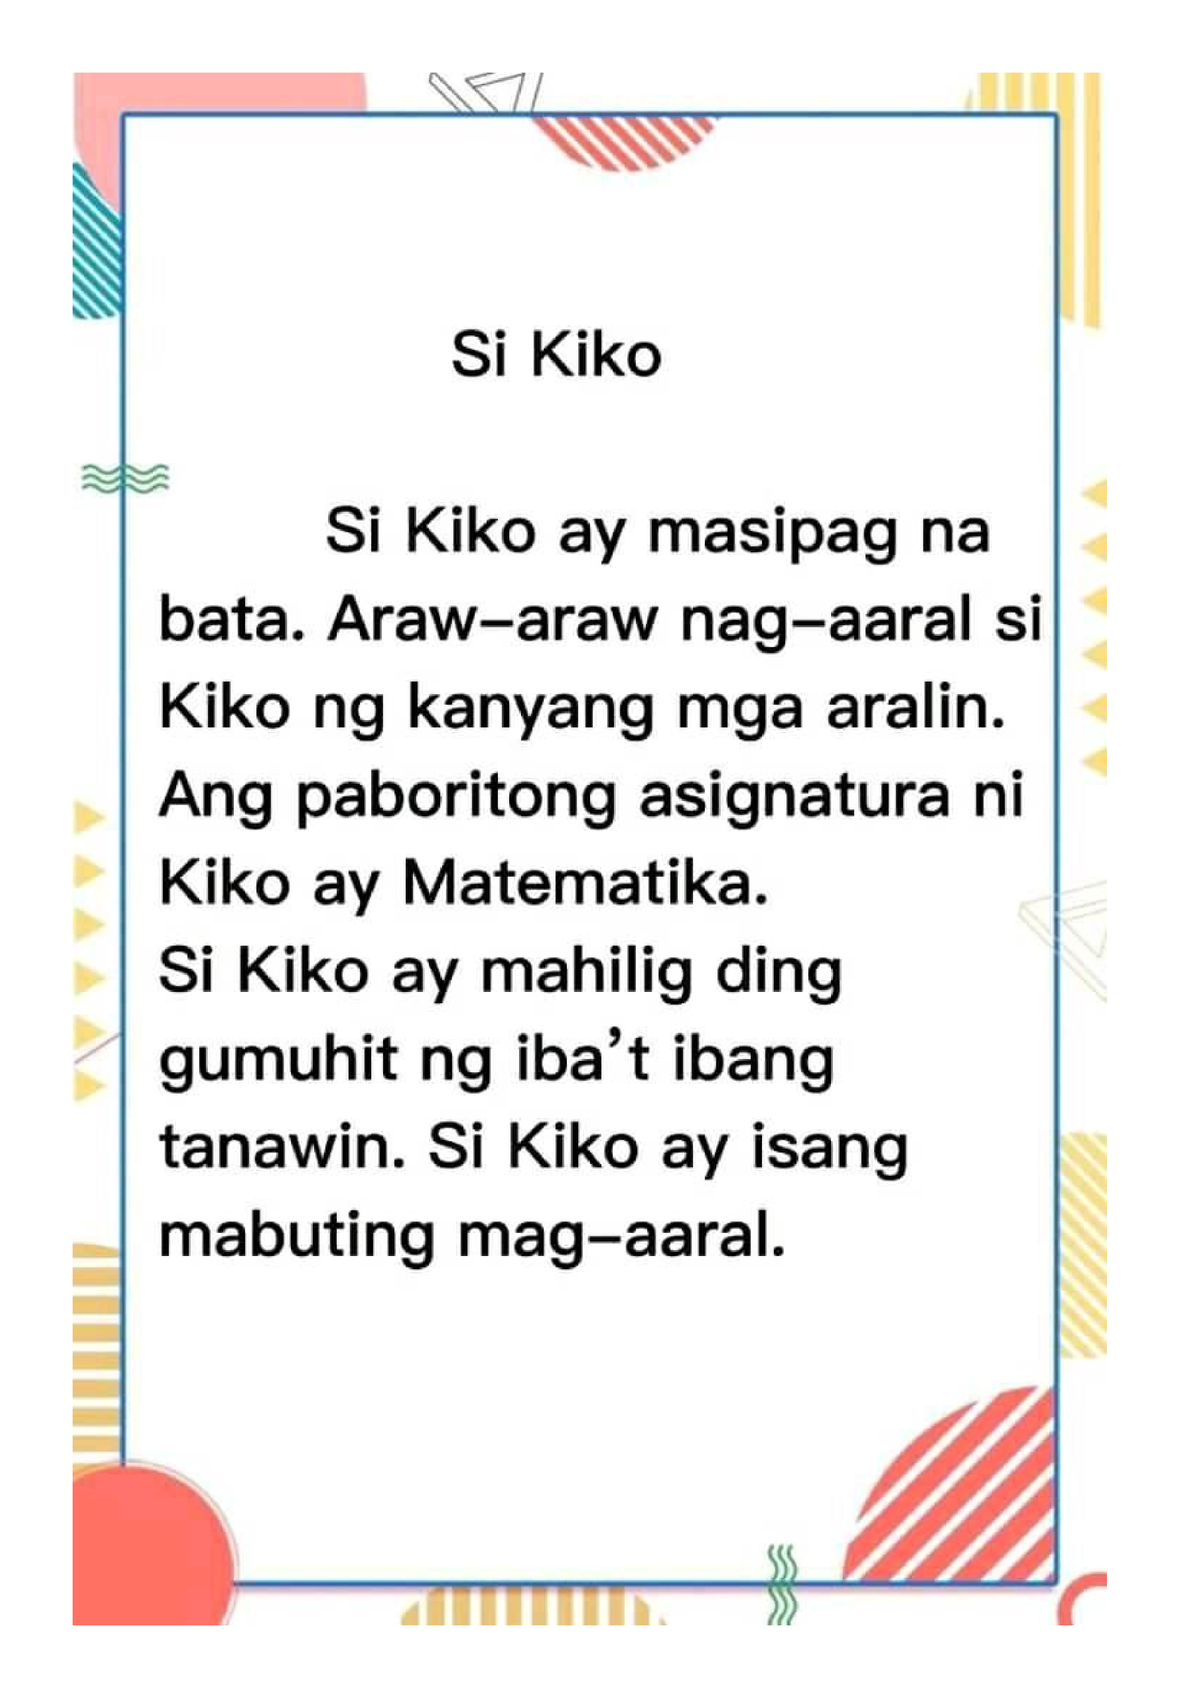 homework meaning sa tagalog